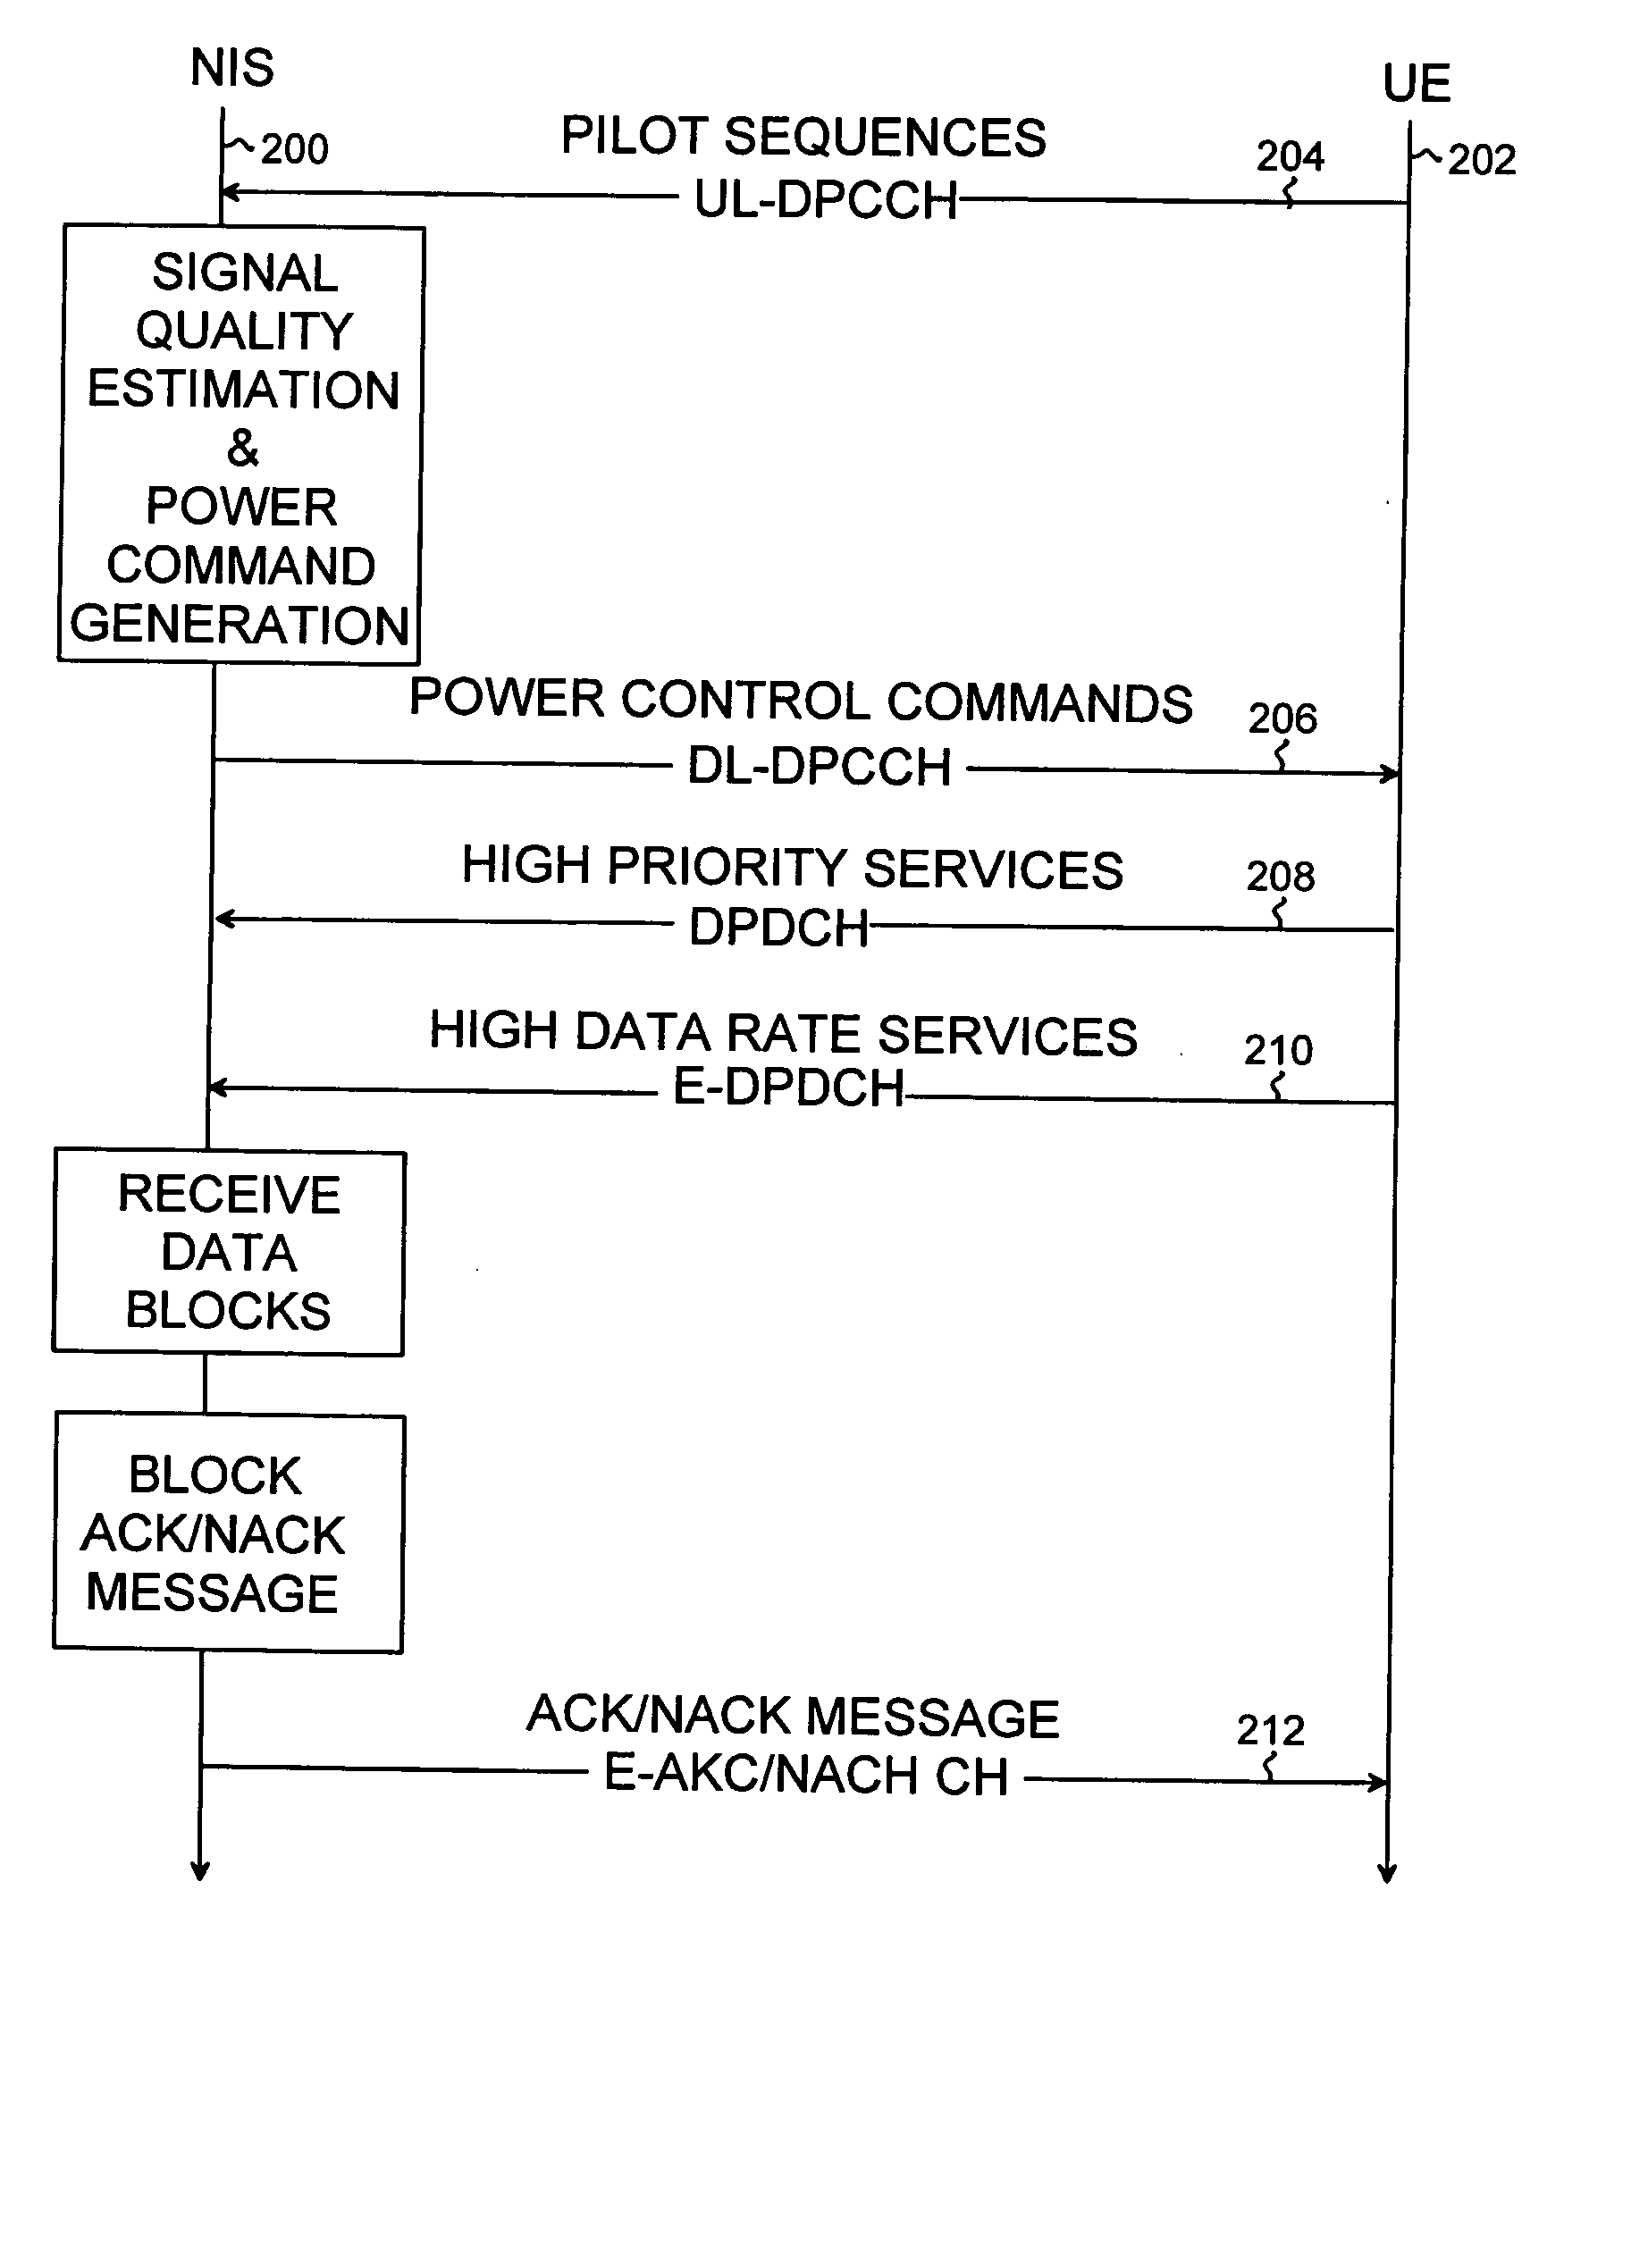 Radio resource control in HSUPA system